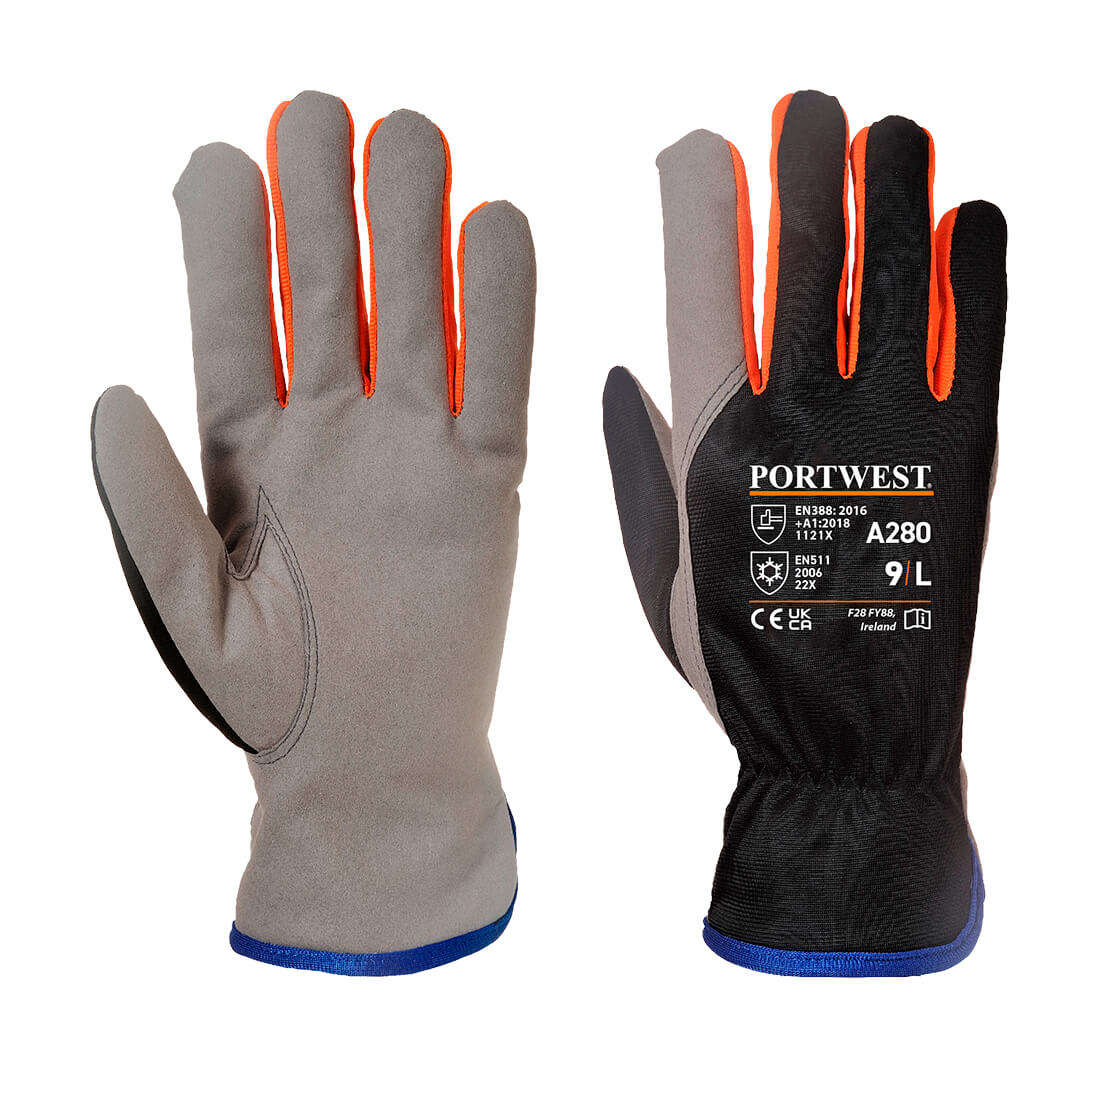 Wintershield Glove - Black/Orange